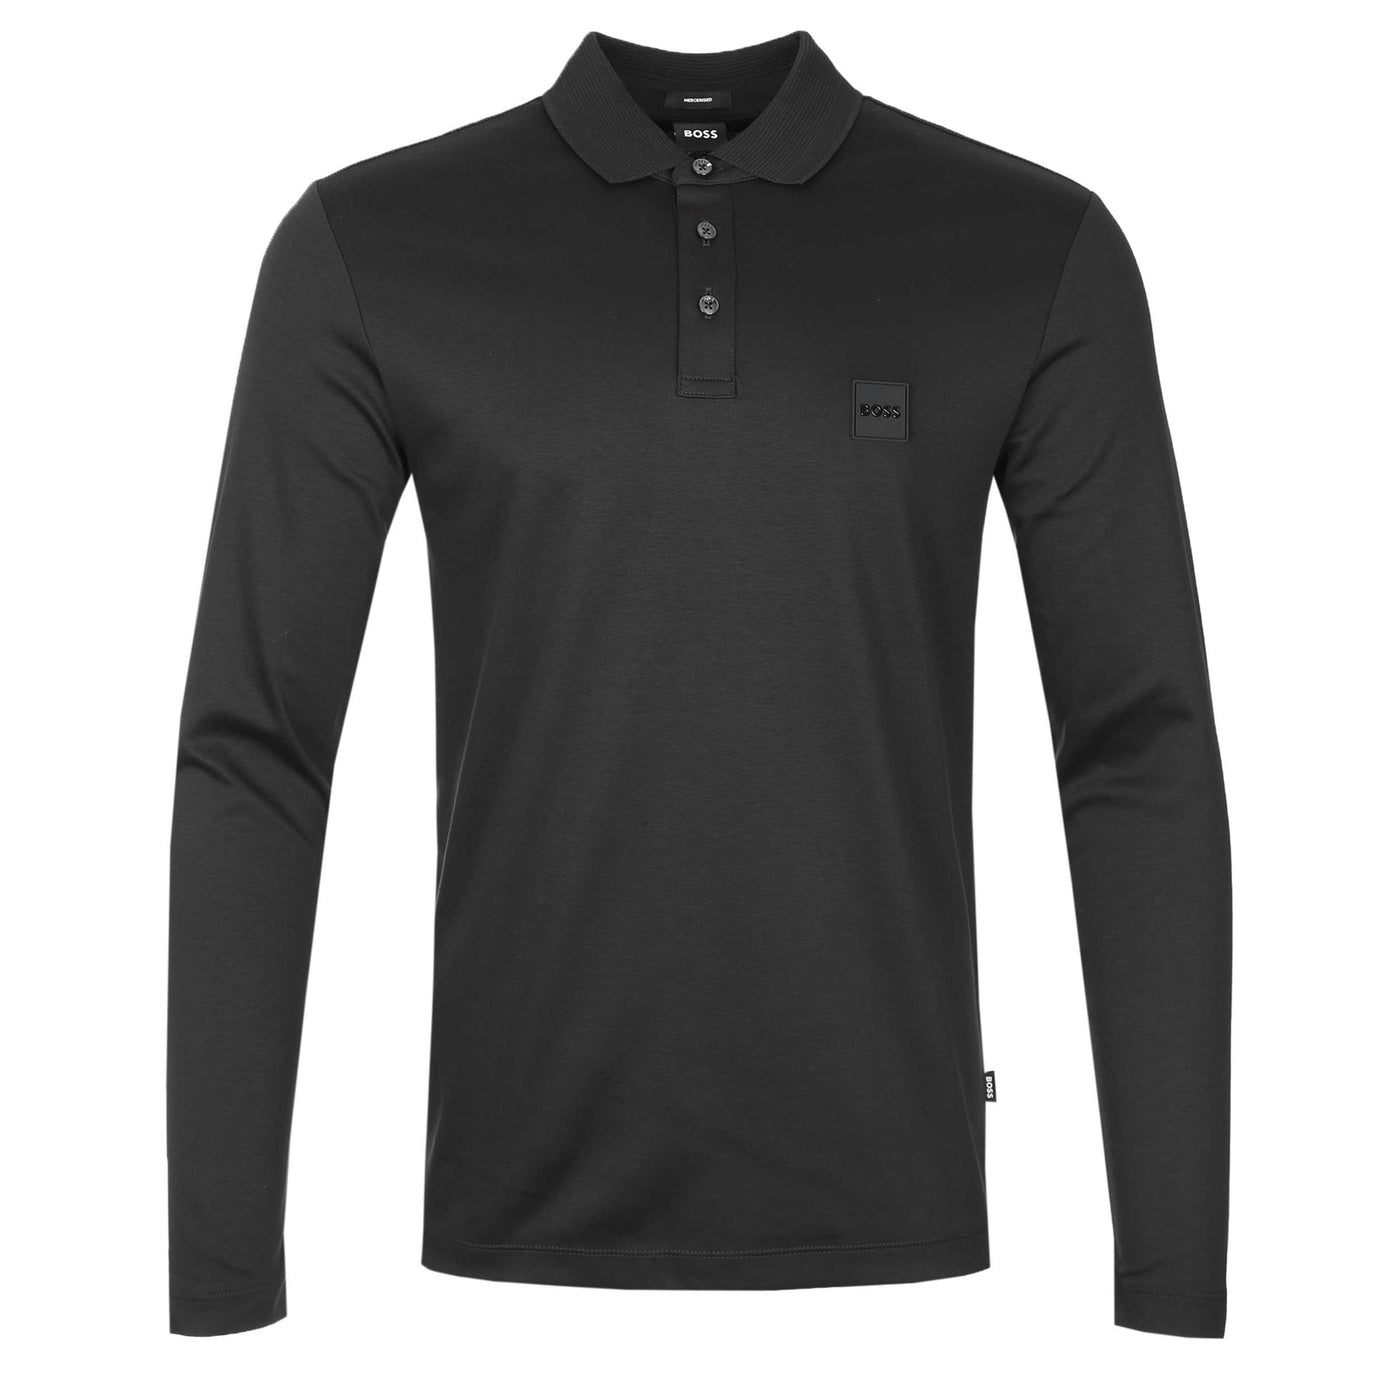 BOSS Pado 08 LS Polo Shirt in Black